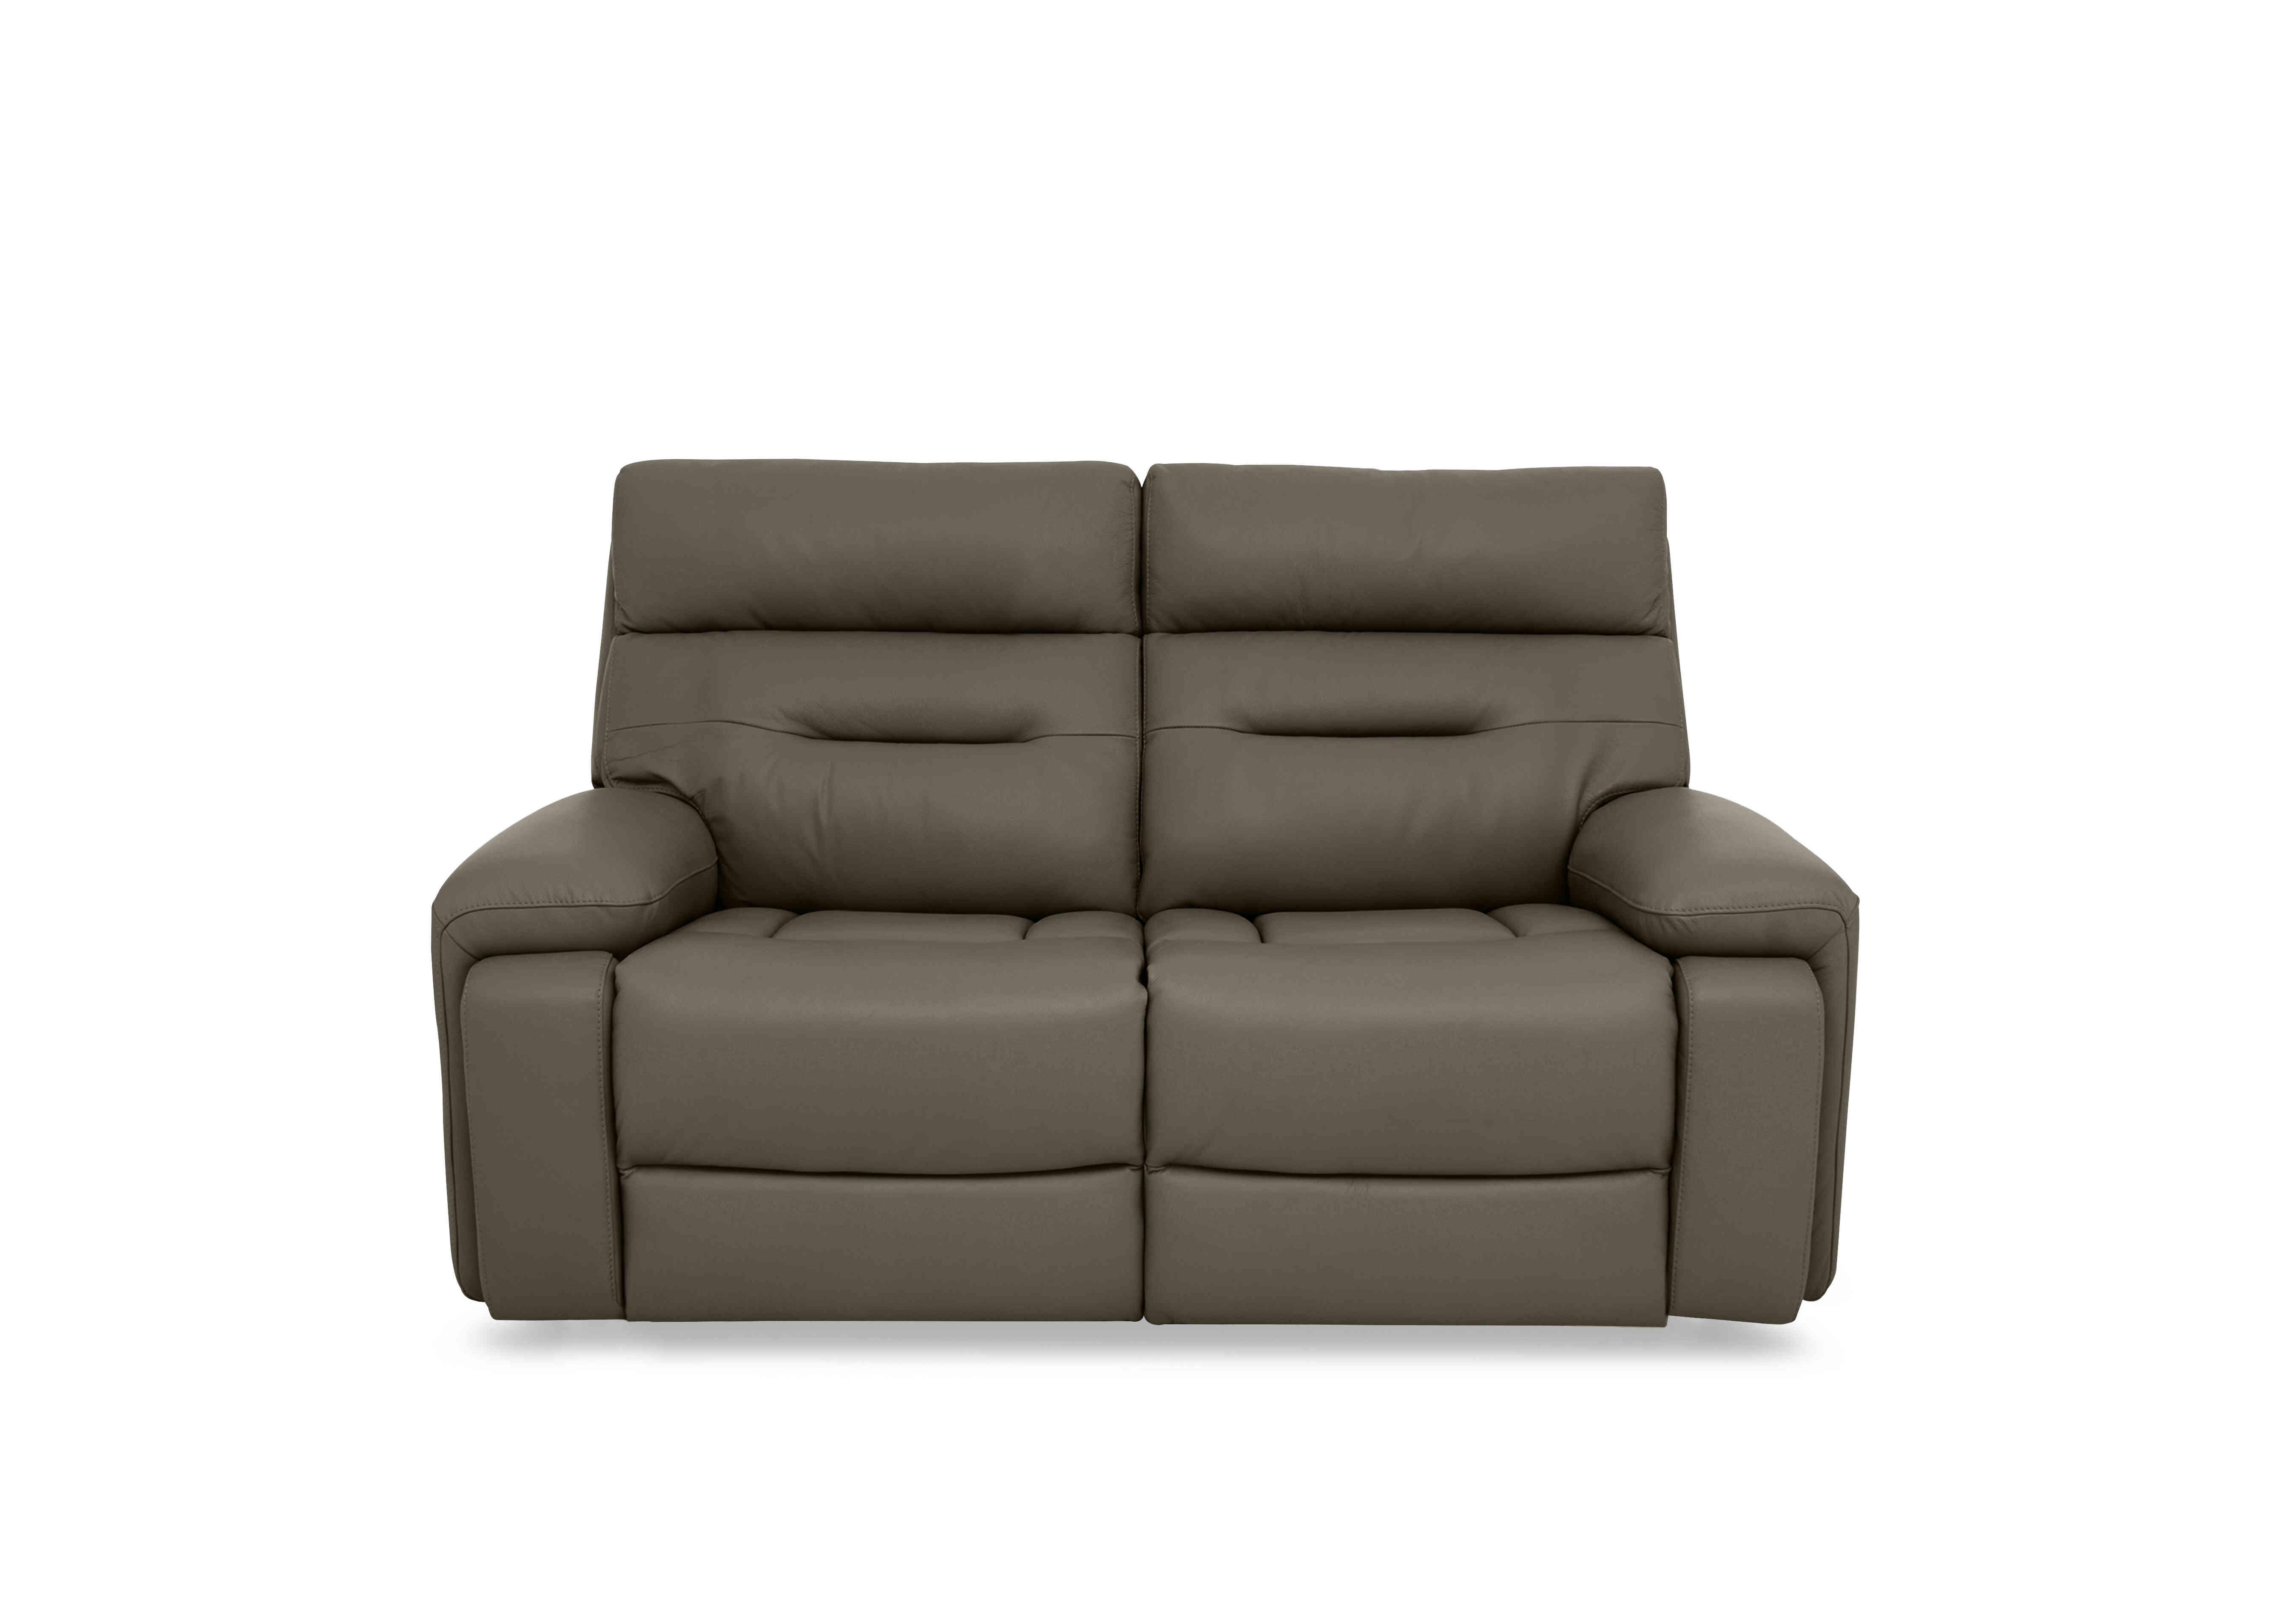 Cinemax 2 Seater Leather Sofa in La-4829 Natural Olive on Furniture Village